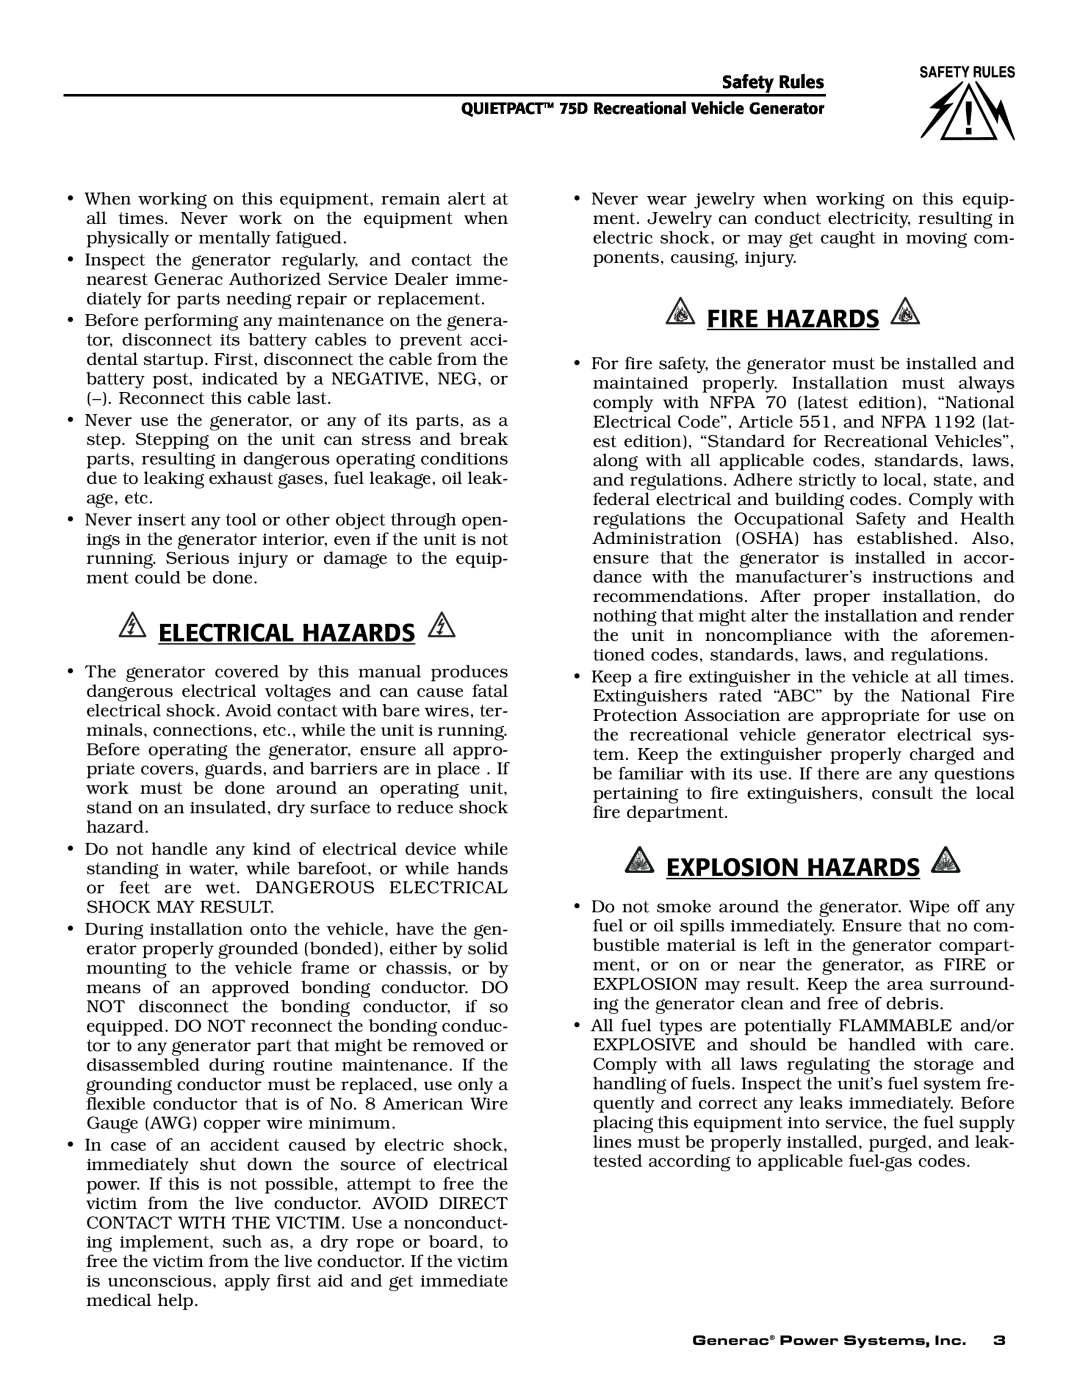 Guardian Technologies 004270-2 owner manual Electrical Hazards, Fire Hazards, Explosion Hazards 